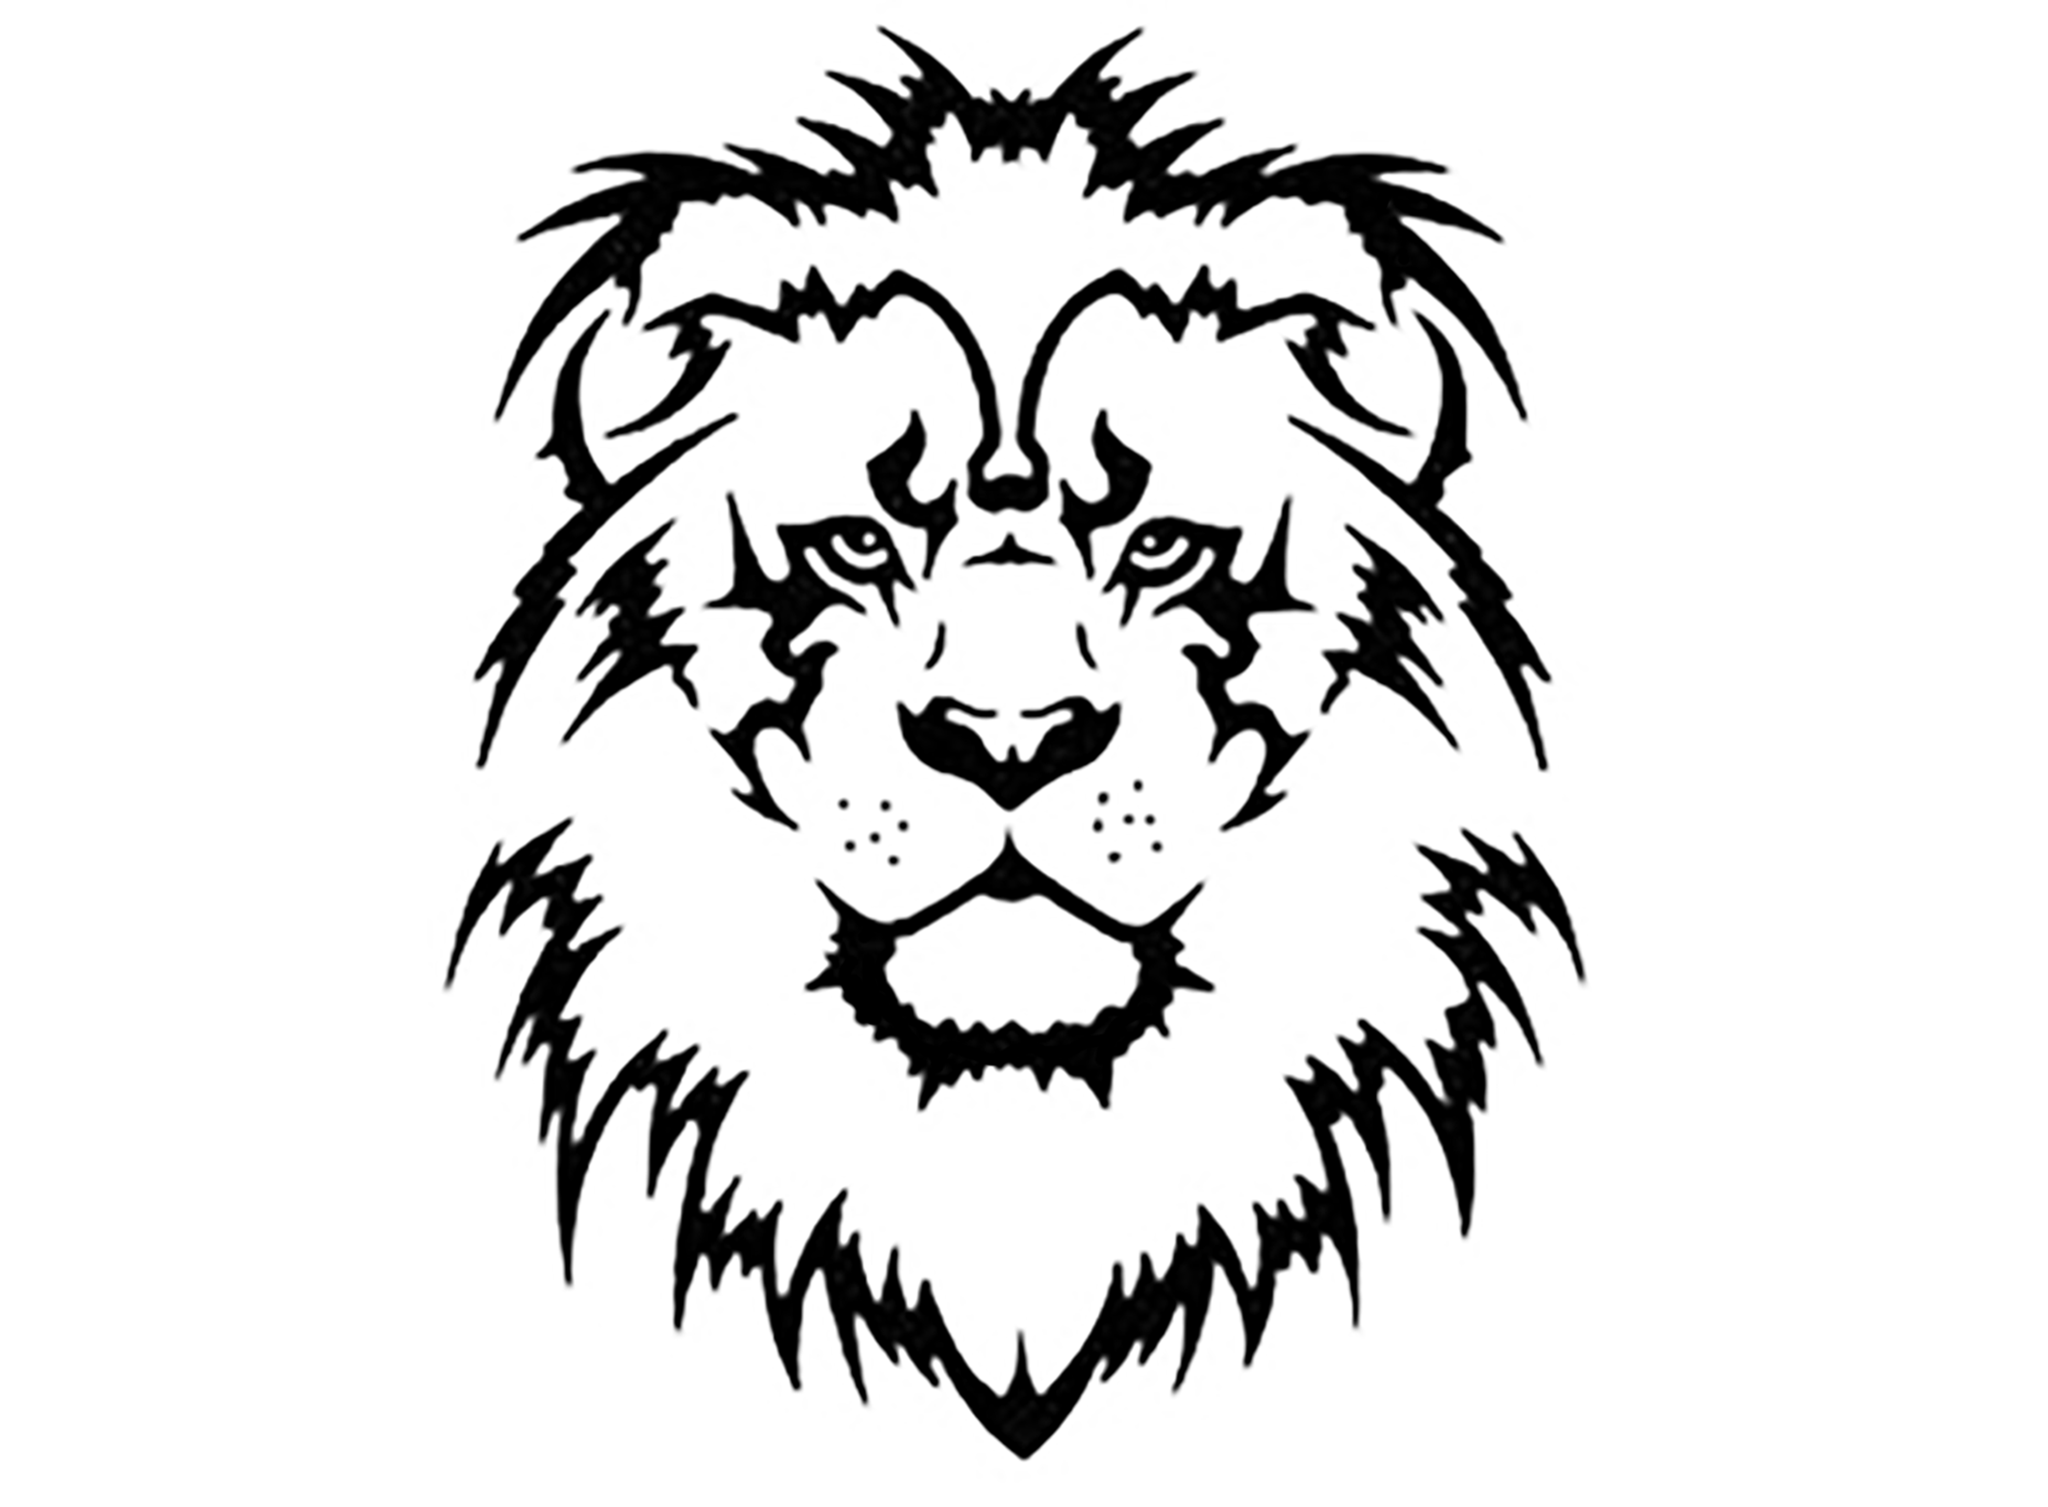 Lion Head Tattoos | Head Tattoos ...